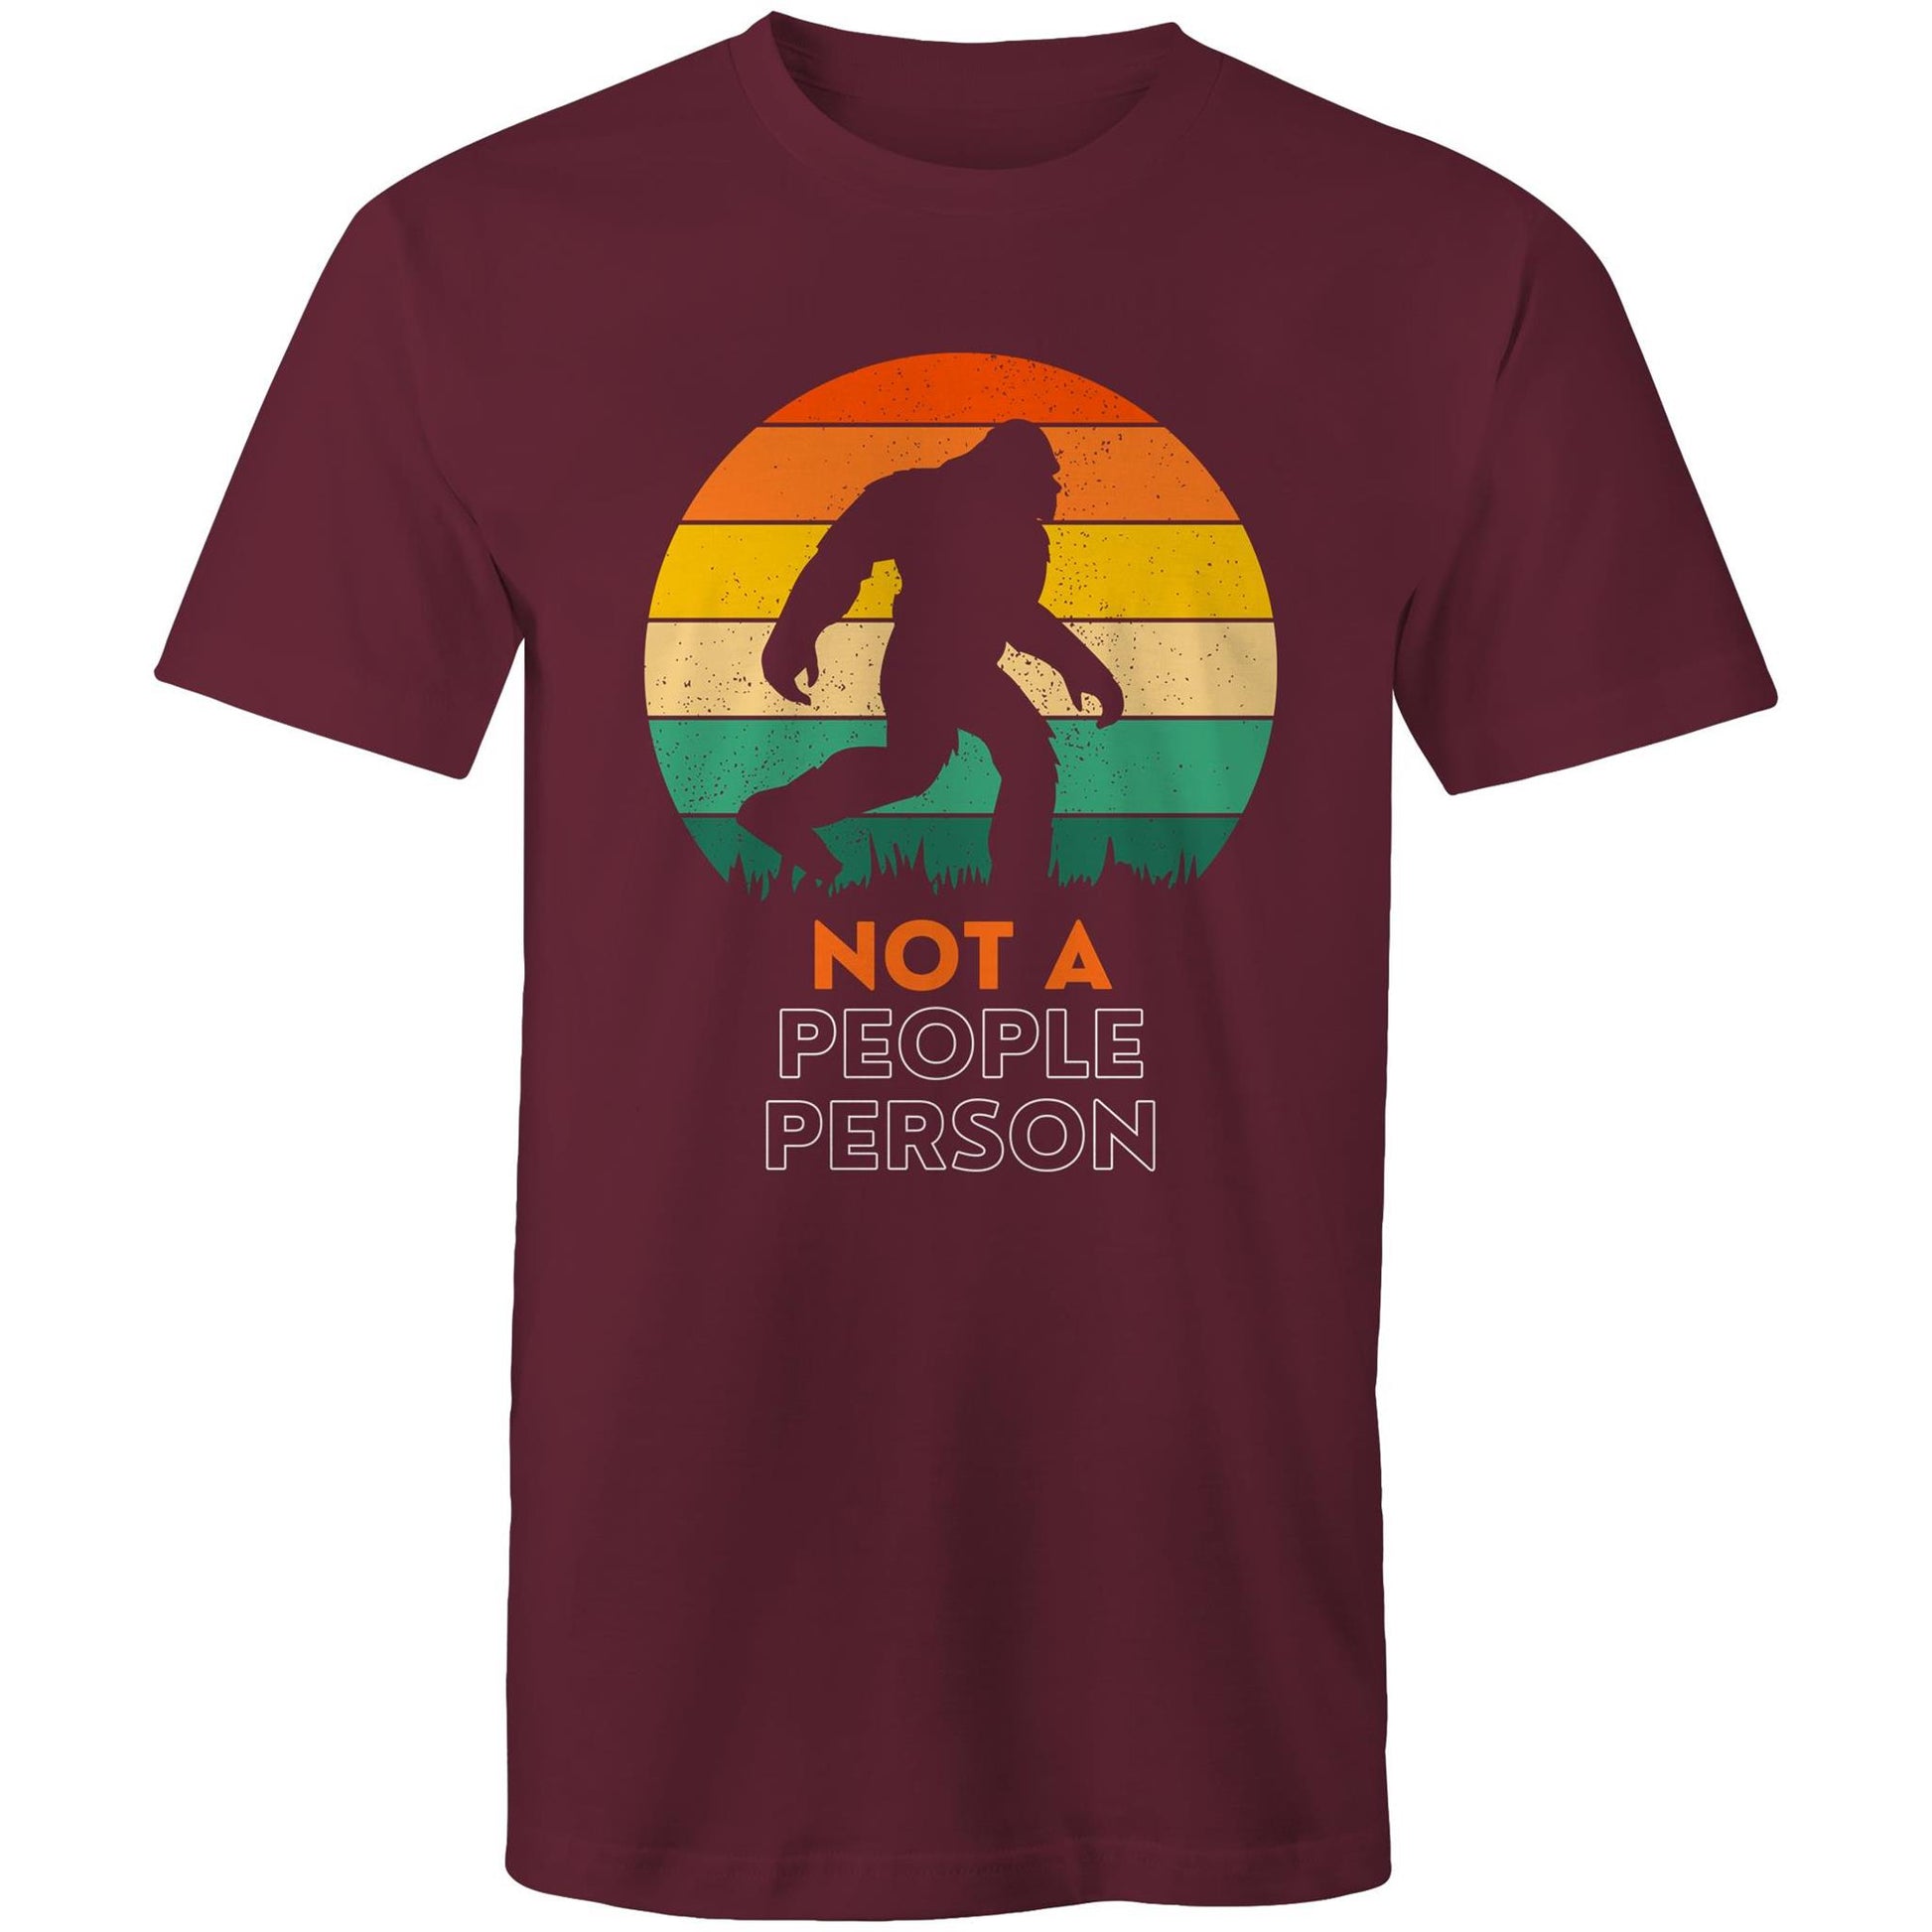 Not A People Person, Big Foot, Sasquatch, Yeti - Mens T-Shirt Burgundy Mens T-shirt Funny